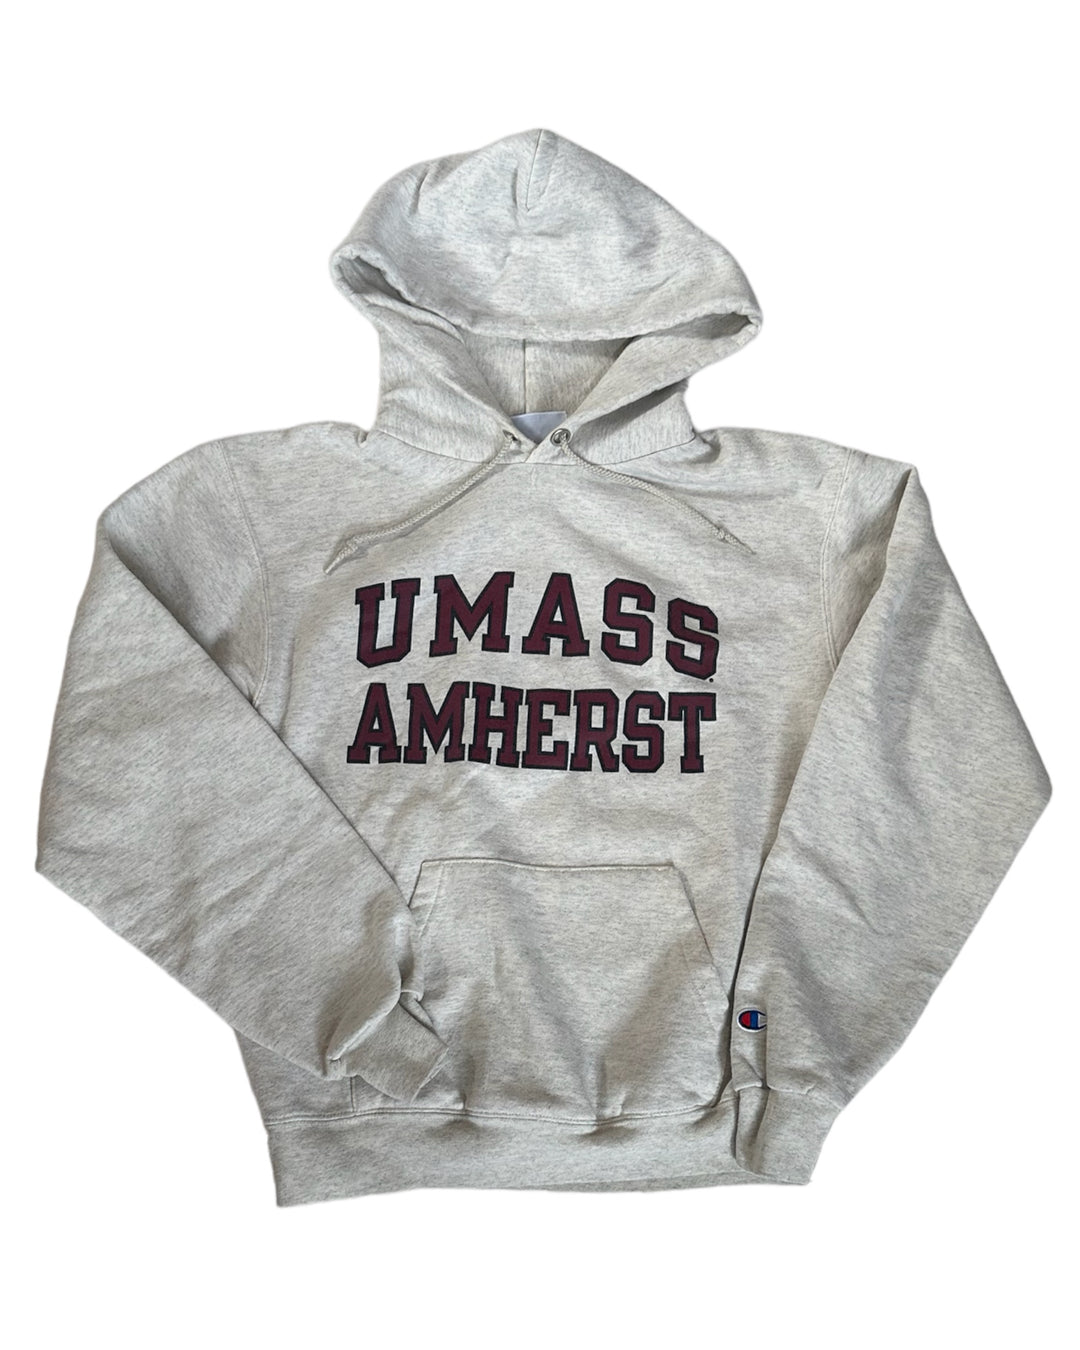 UMass Vintage Sweatshirt